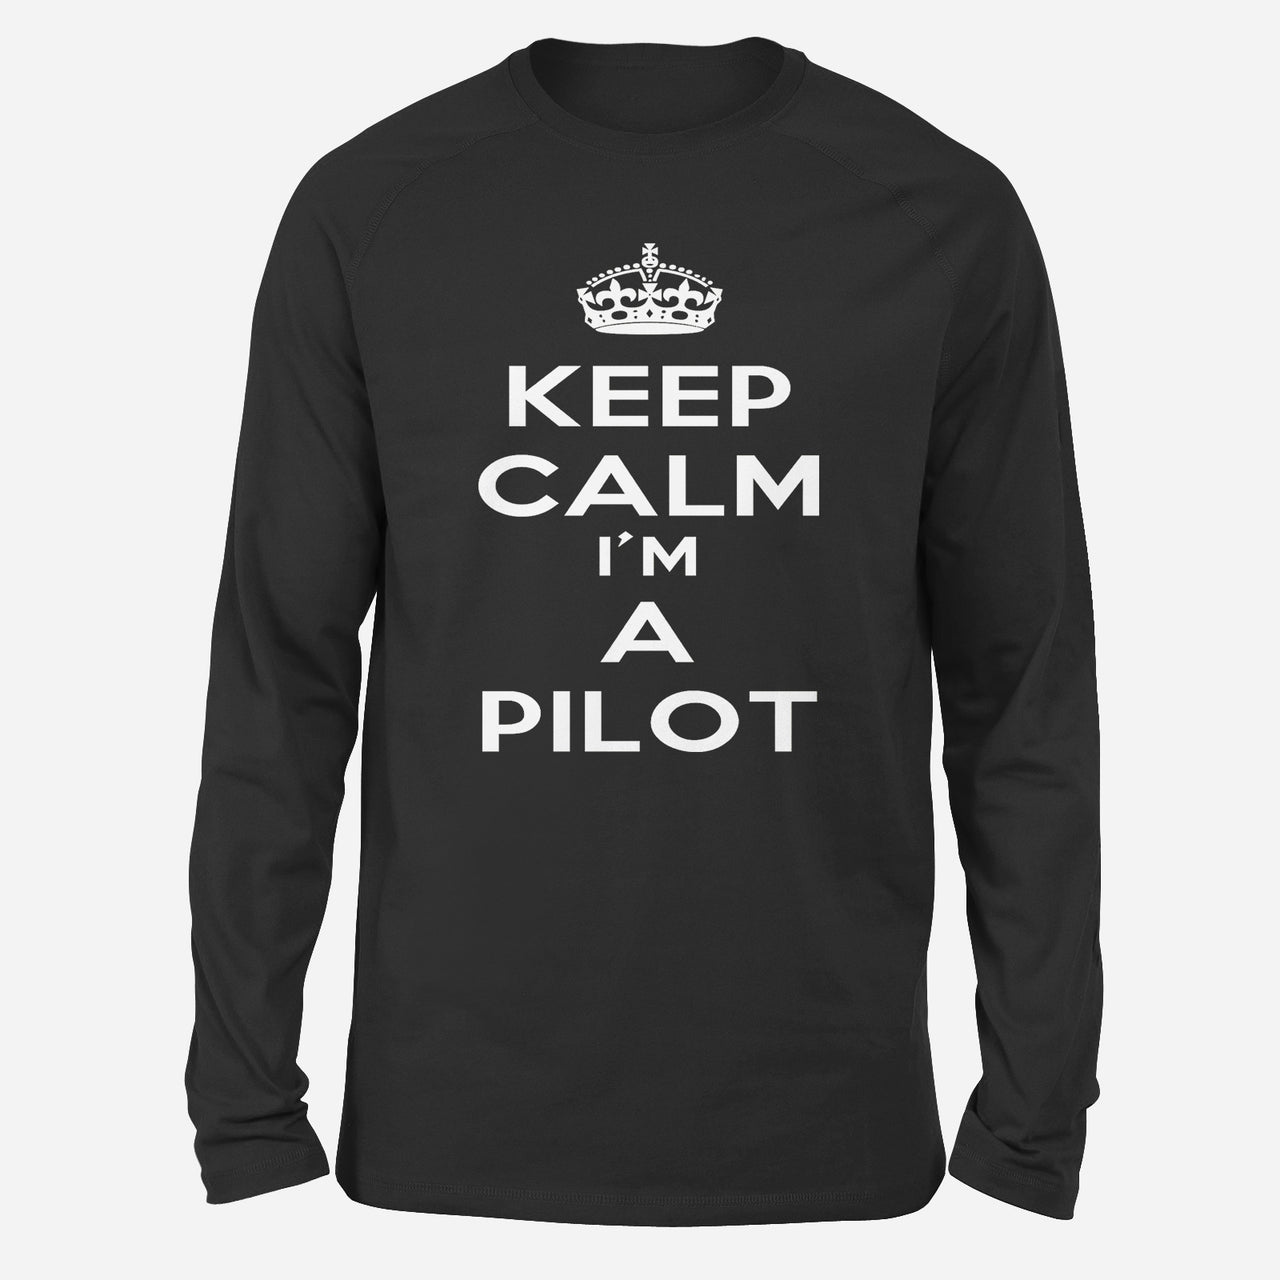 Keep Calm I'm a Pilot Designed Long-Sleeve T-Shirts